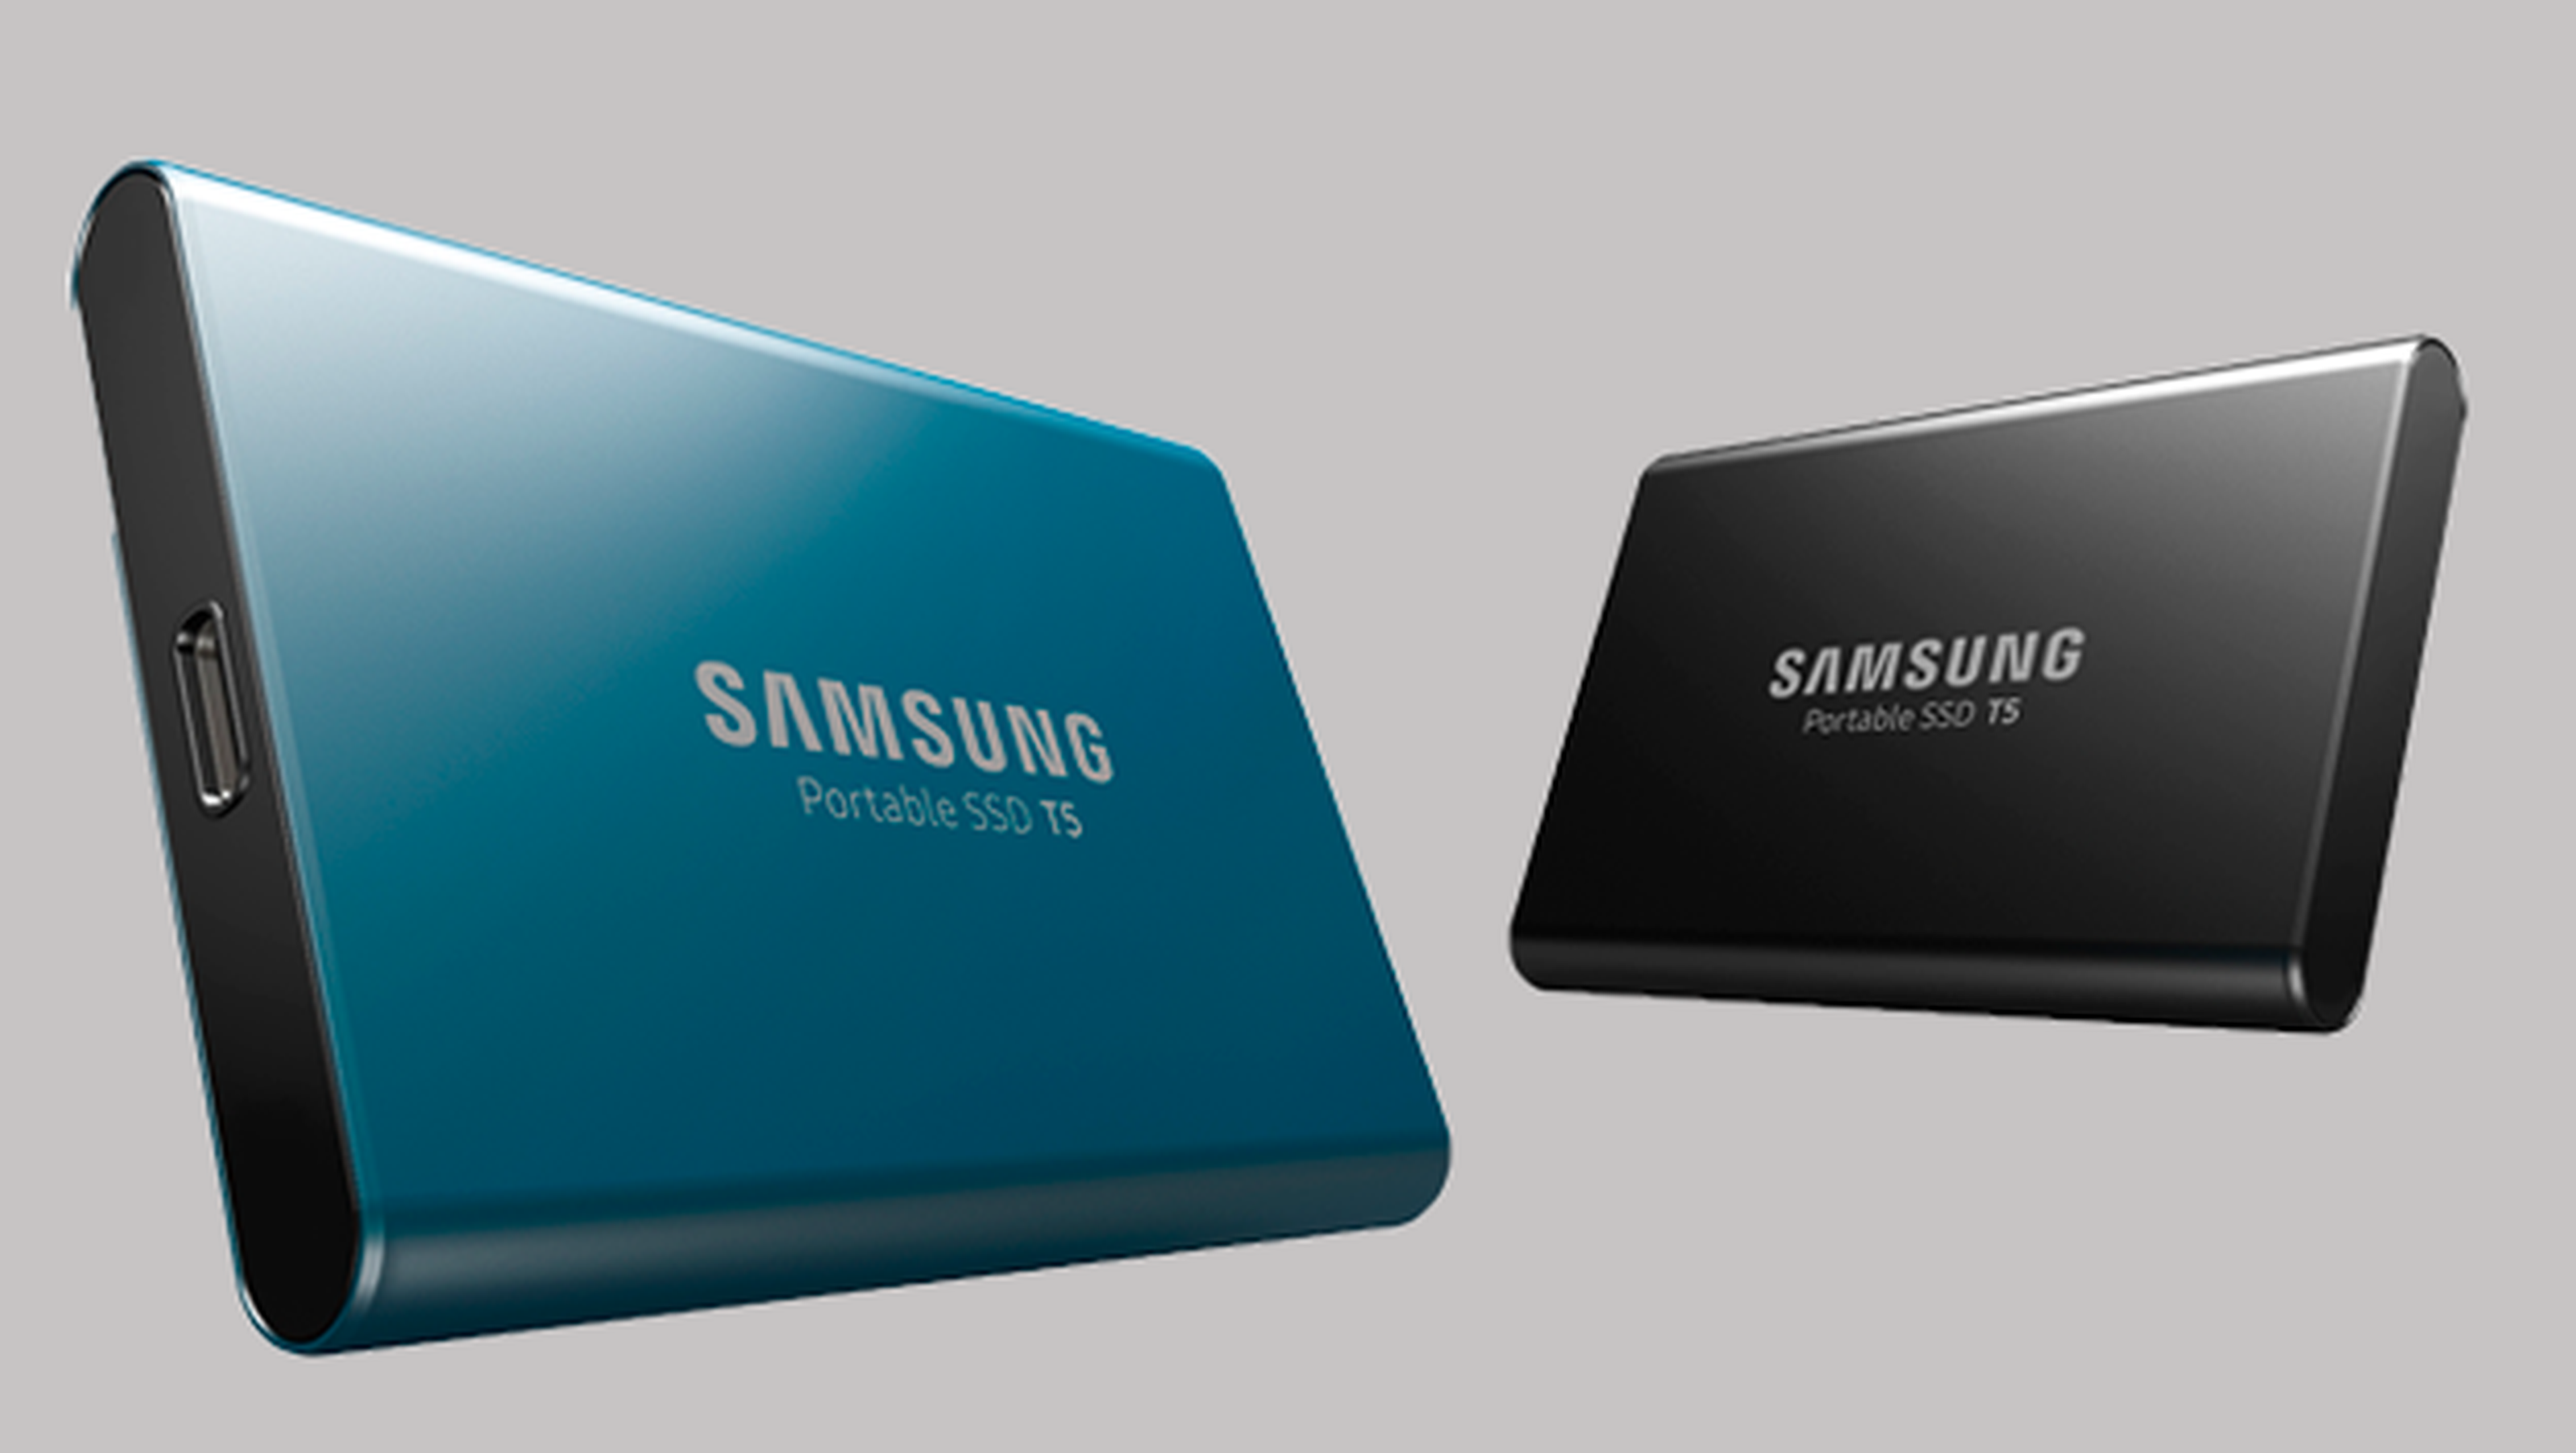 Nuevo disco duro portátil Samsung SSD T5